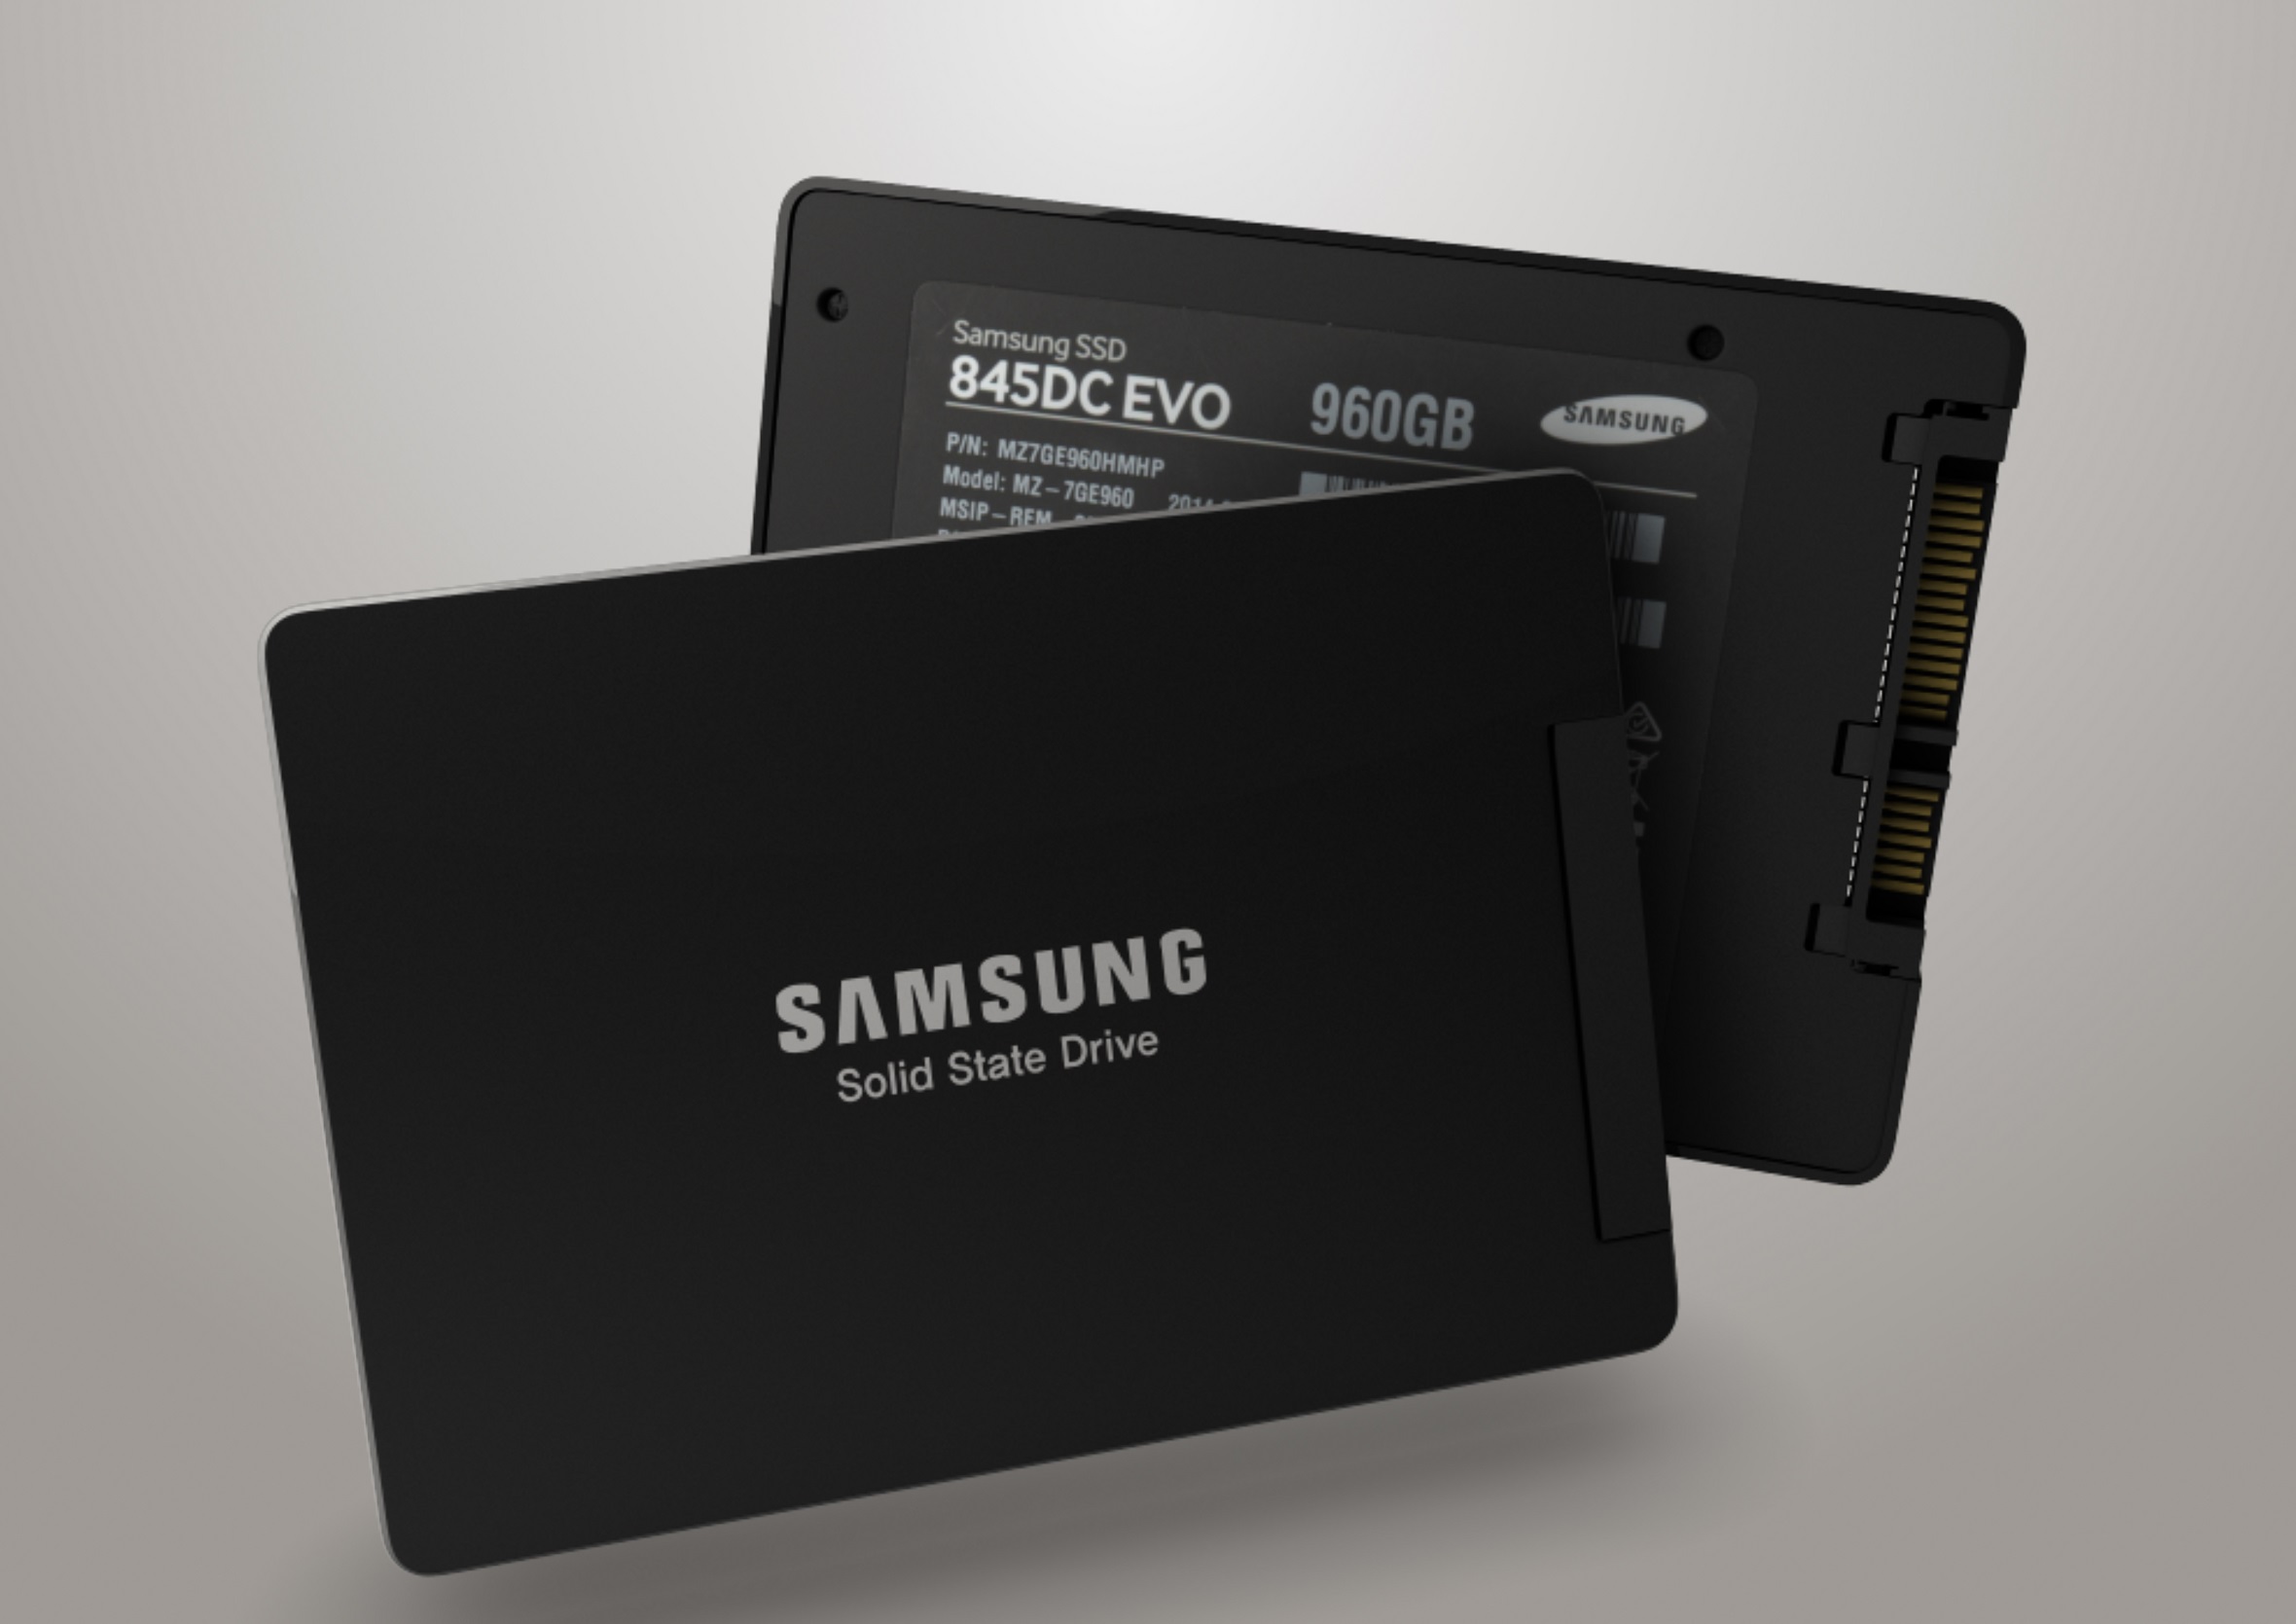 Samsung Introduces 845DC EVO SSD